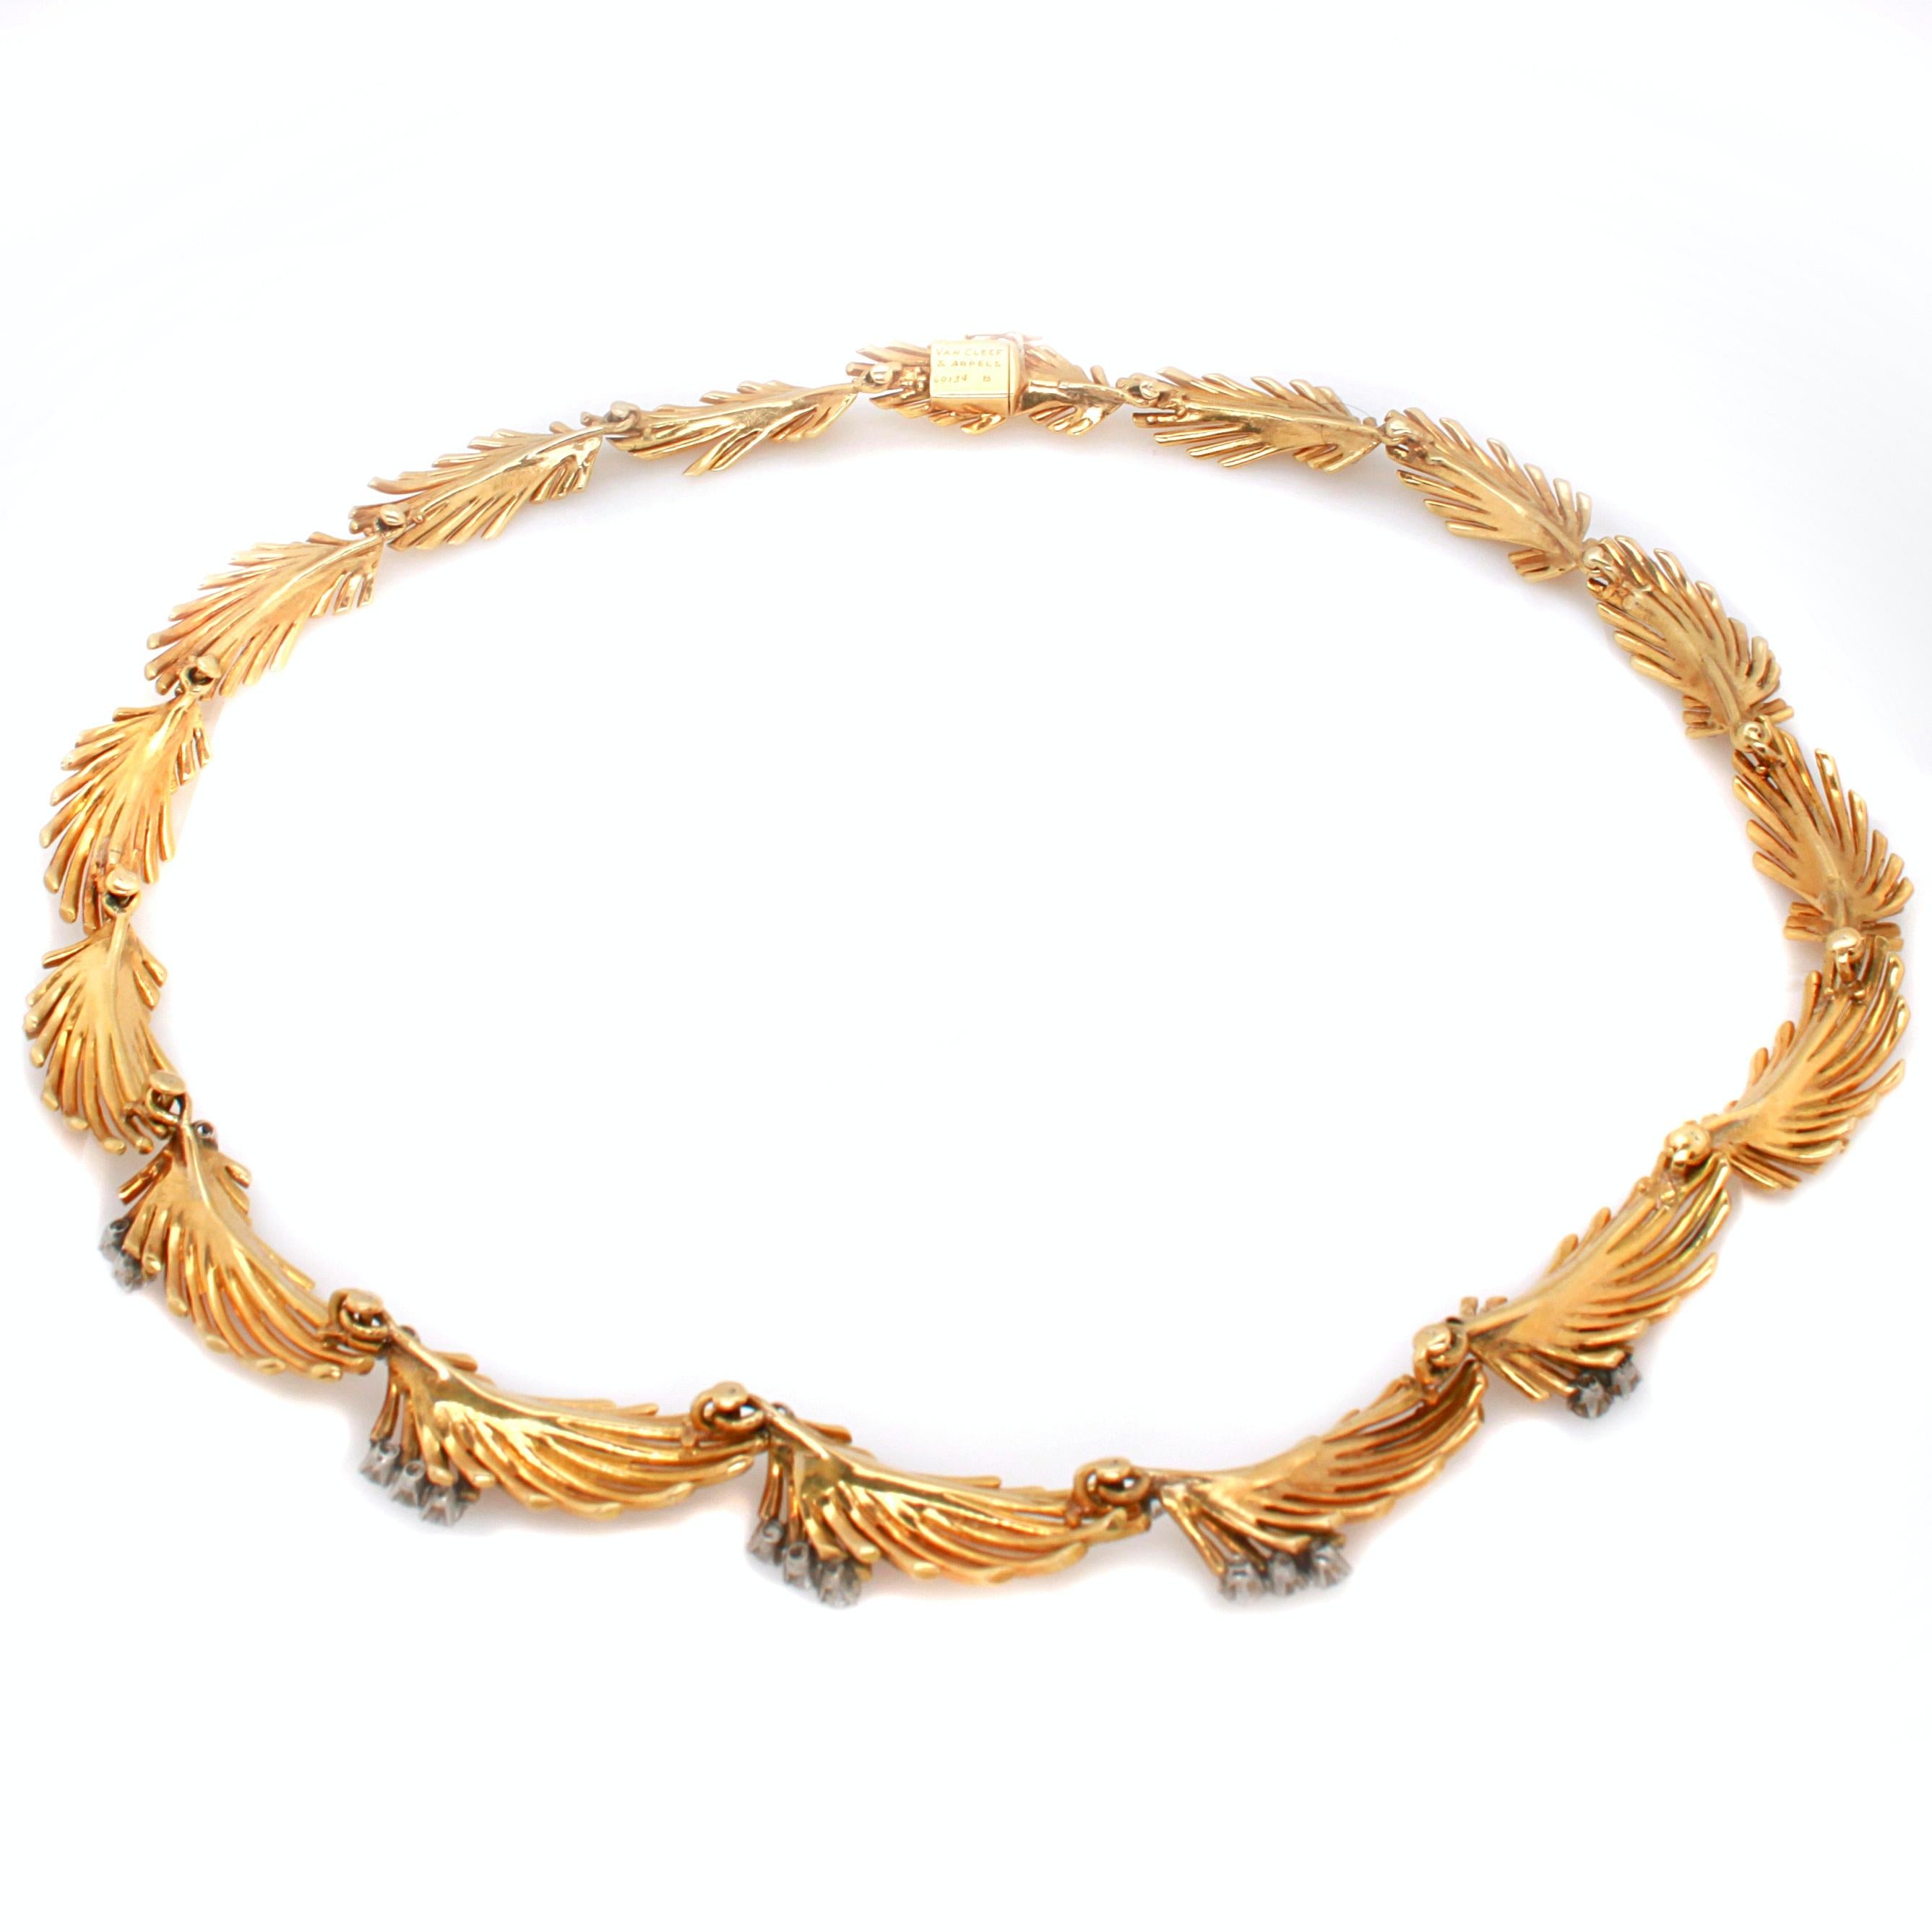 Retro Van Cleef & Arpels Palm Leaf Gold and Diamond Necklace, circa 1950s